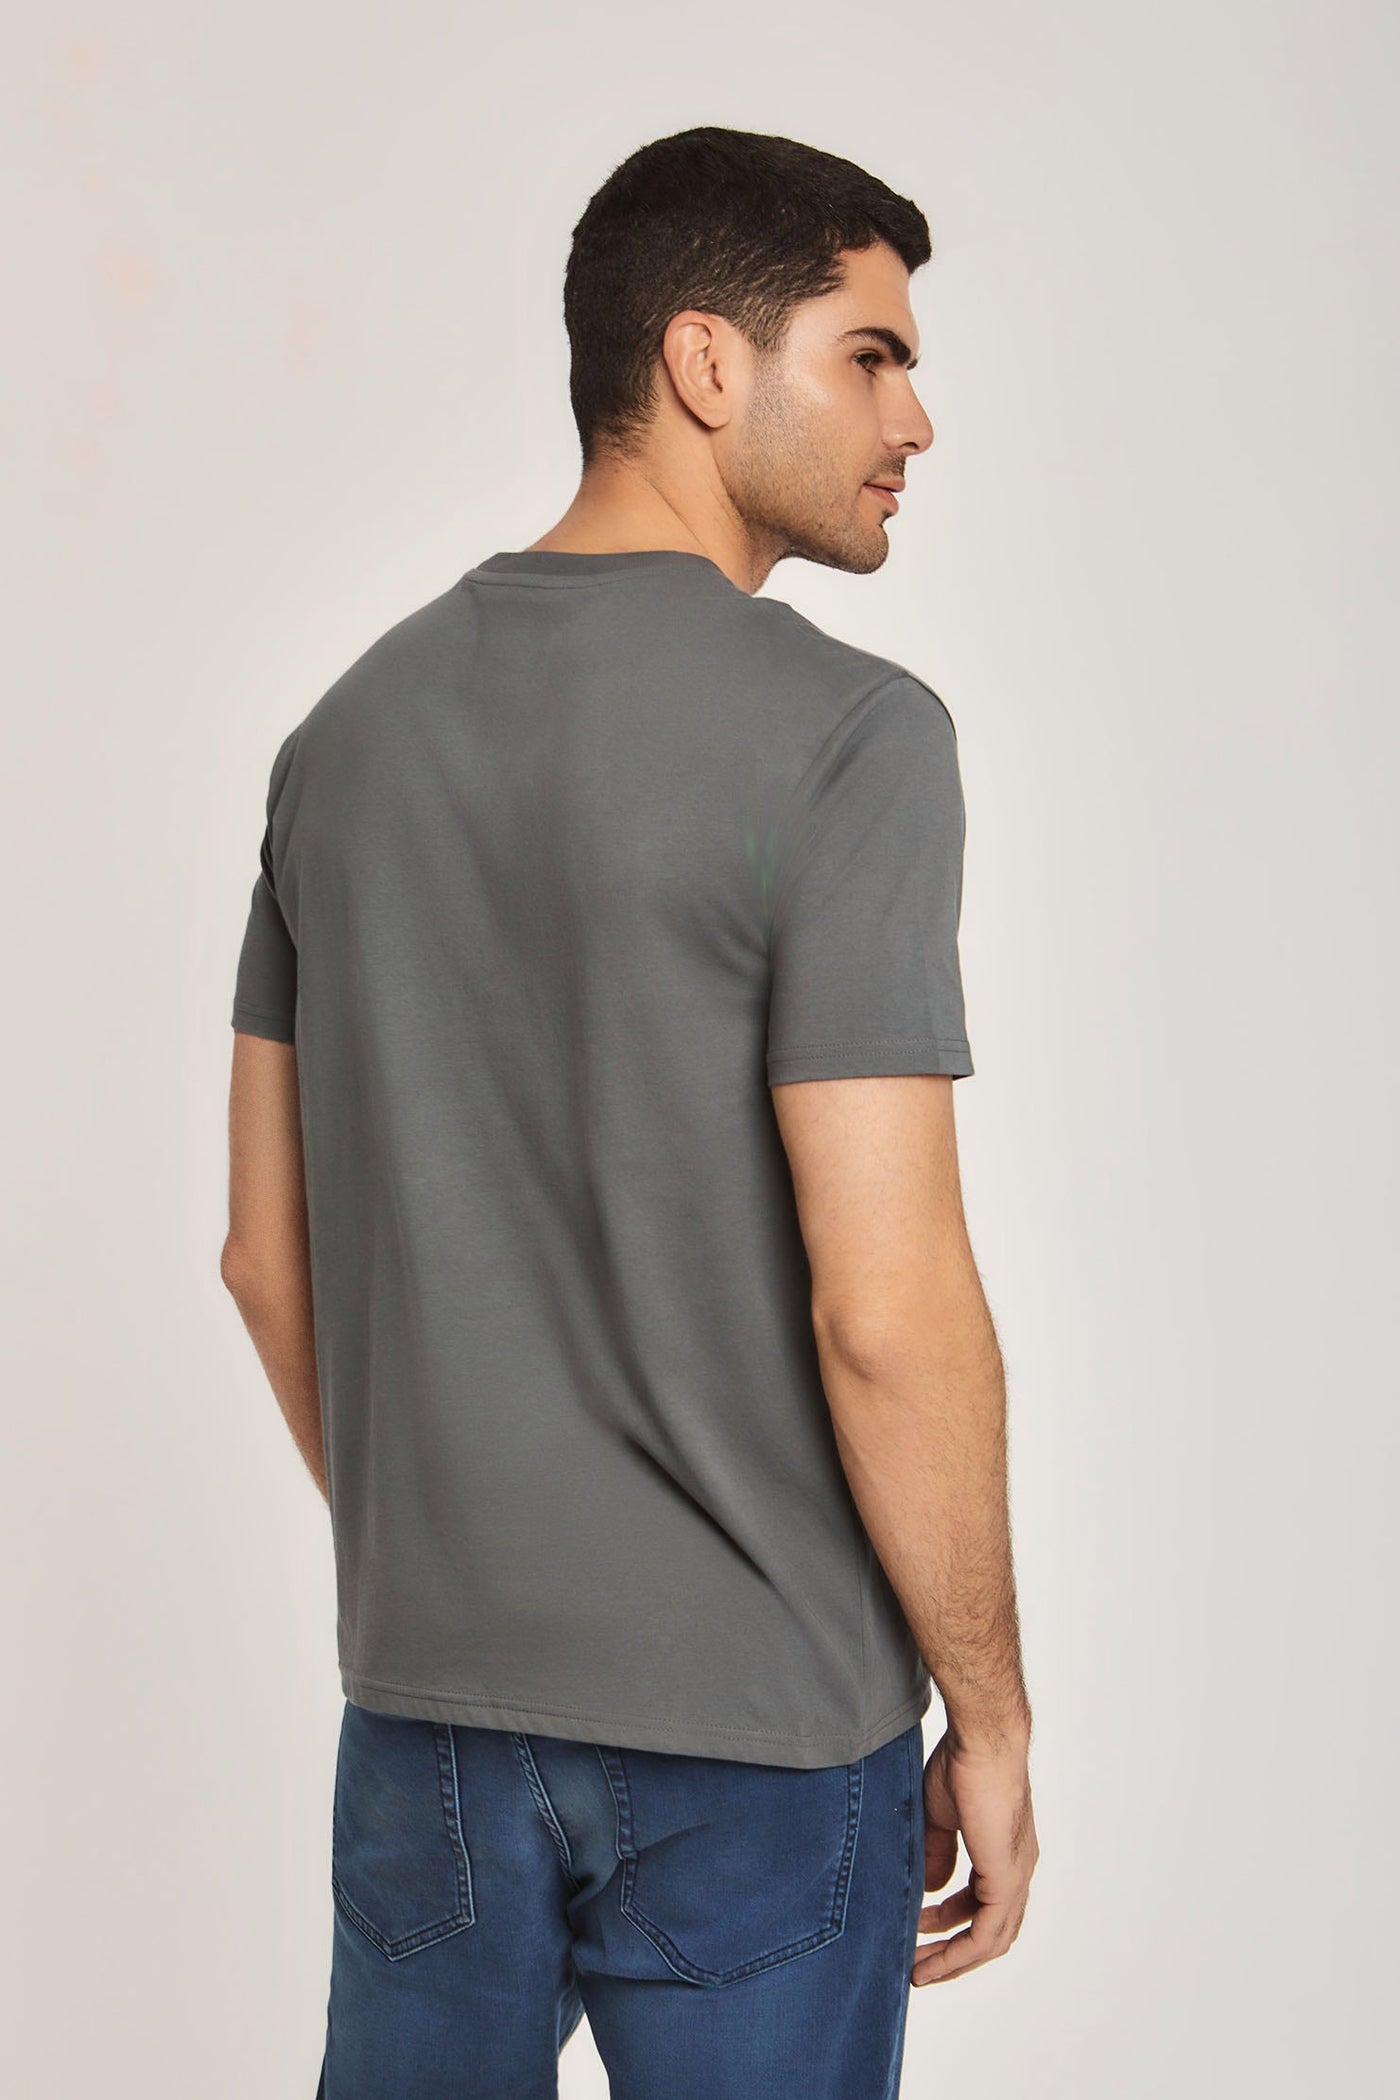 T-Shirt - Patterned - Half Sleeve